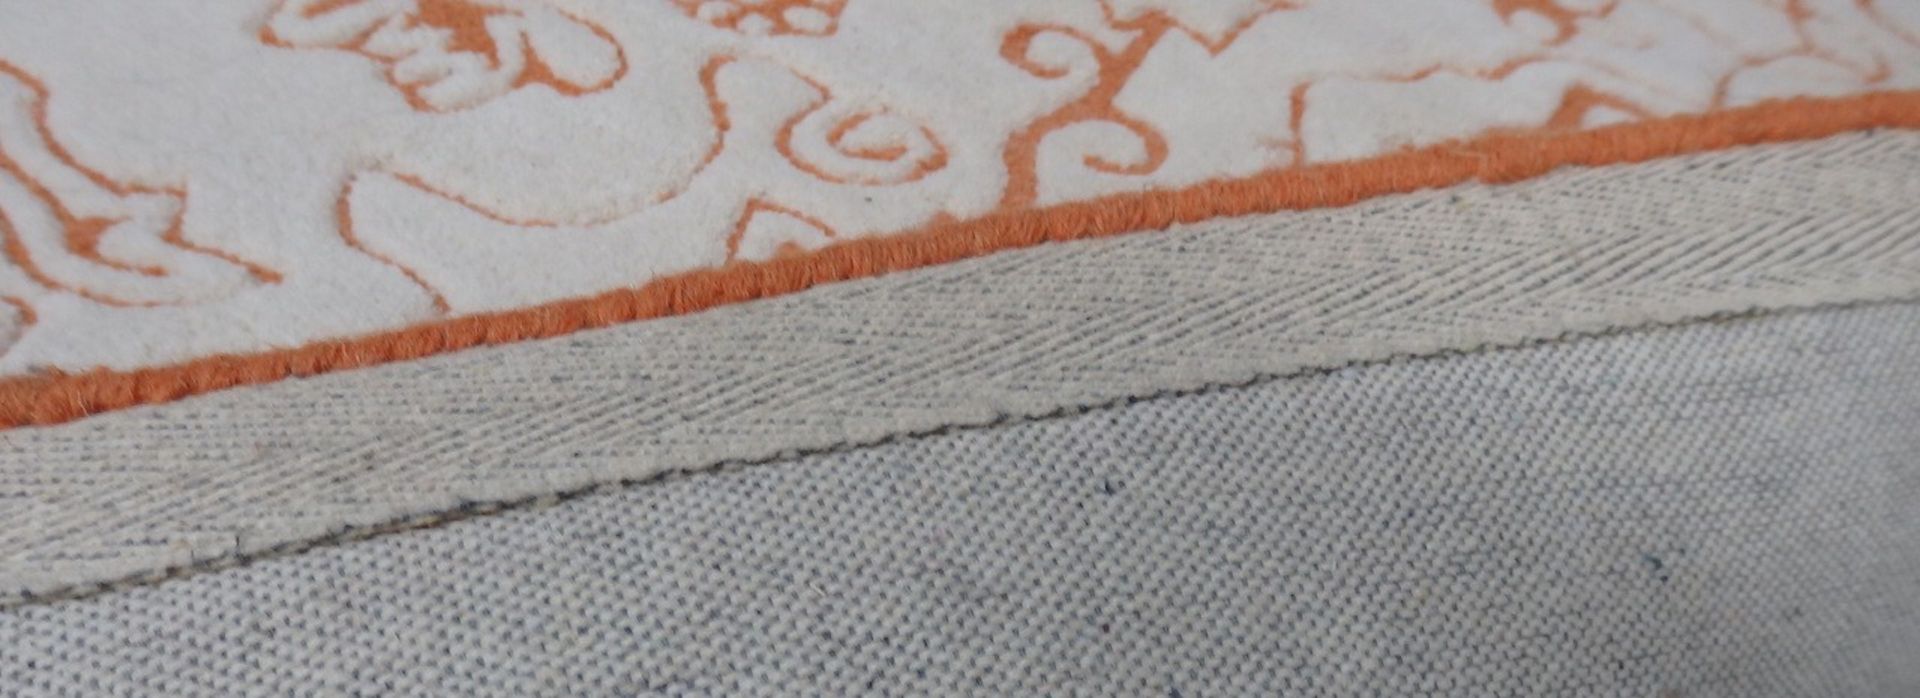 1 x LIGNE ROSET Wool Rug 250 X 200 Orange / White (Aw13) - Ref: 3597962 - CL087 - Location: - Image 6 of 6